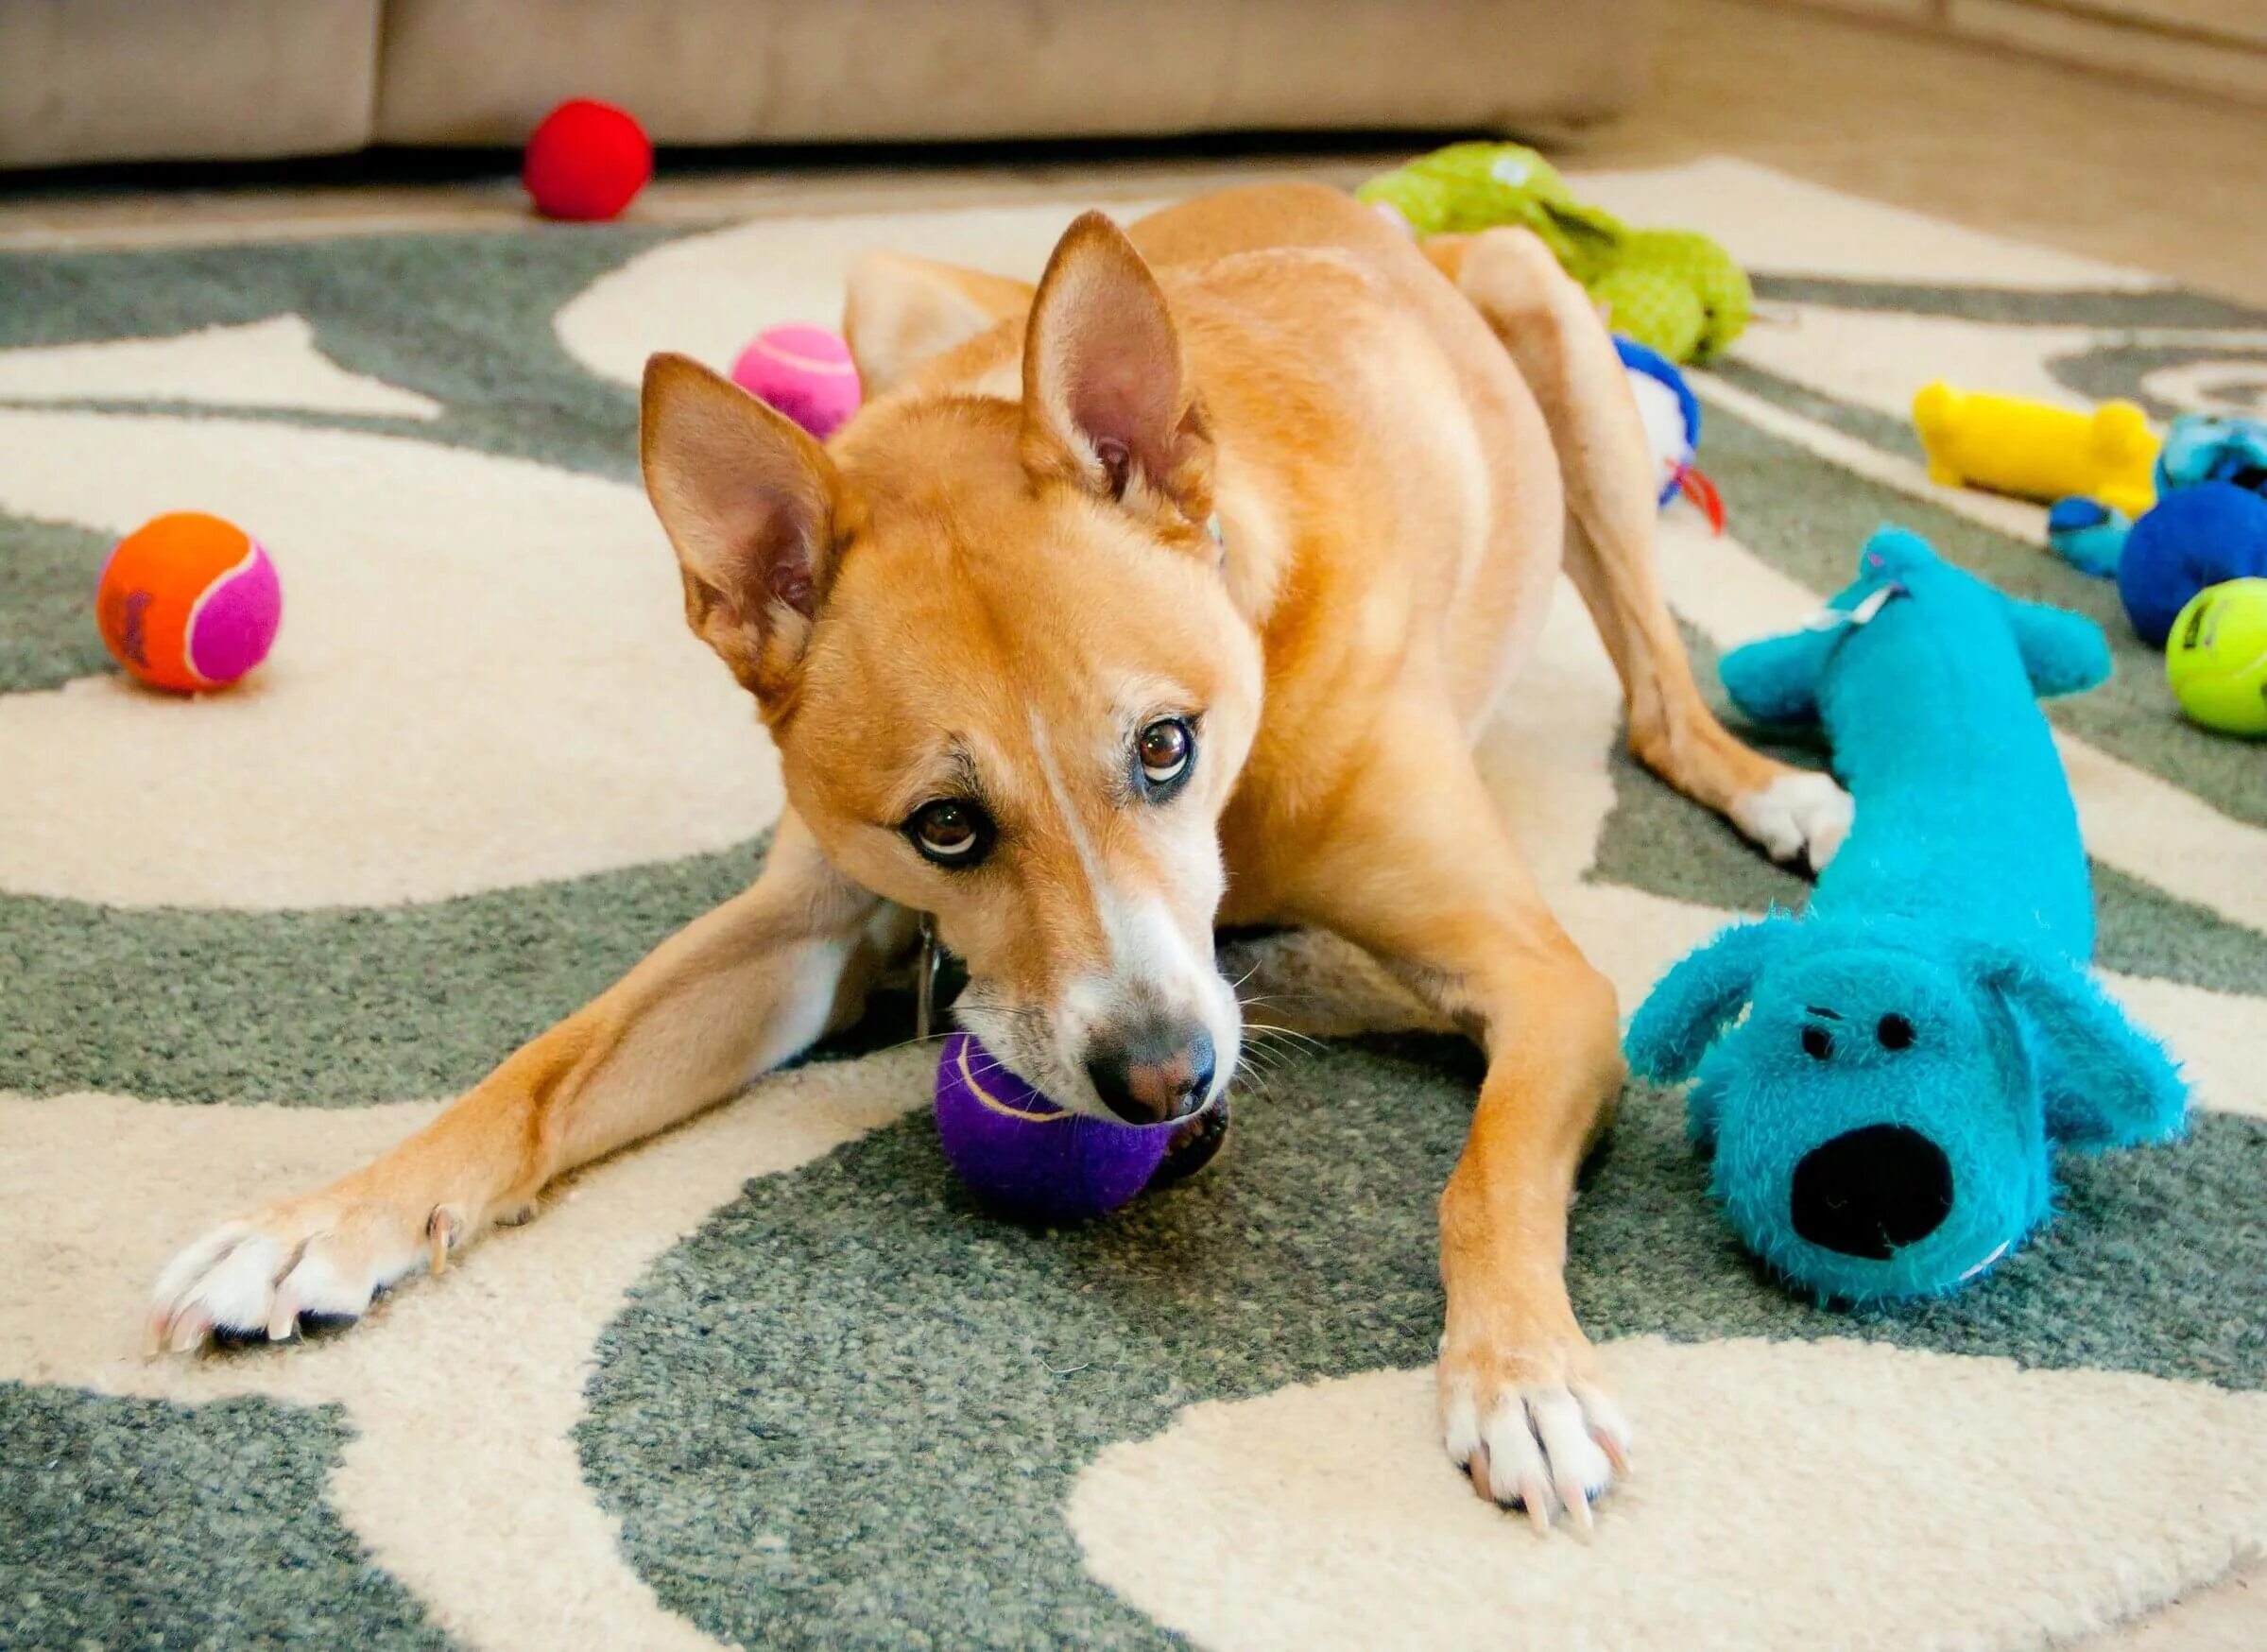 Having pets at home. Игрушка для собак. Собаки и их игрушки. Dog Toys игрушки для собак. Собака охраняет игрушку.